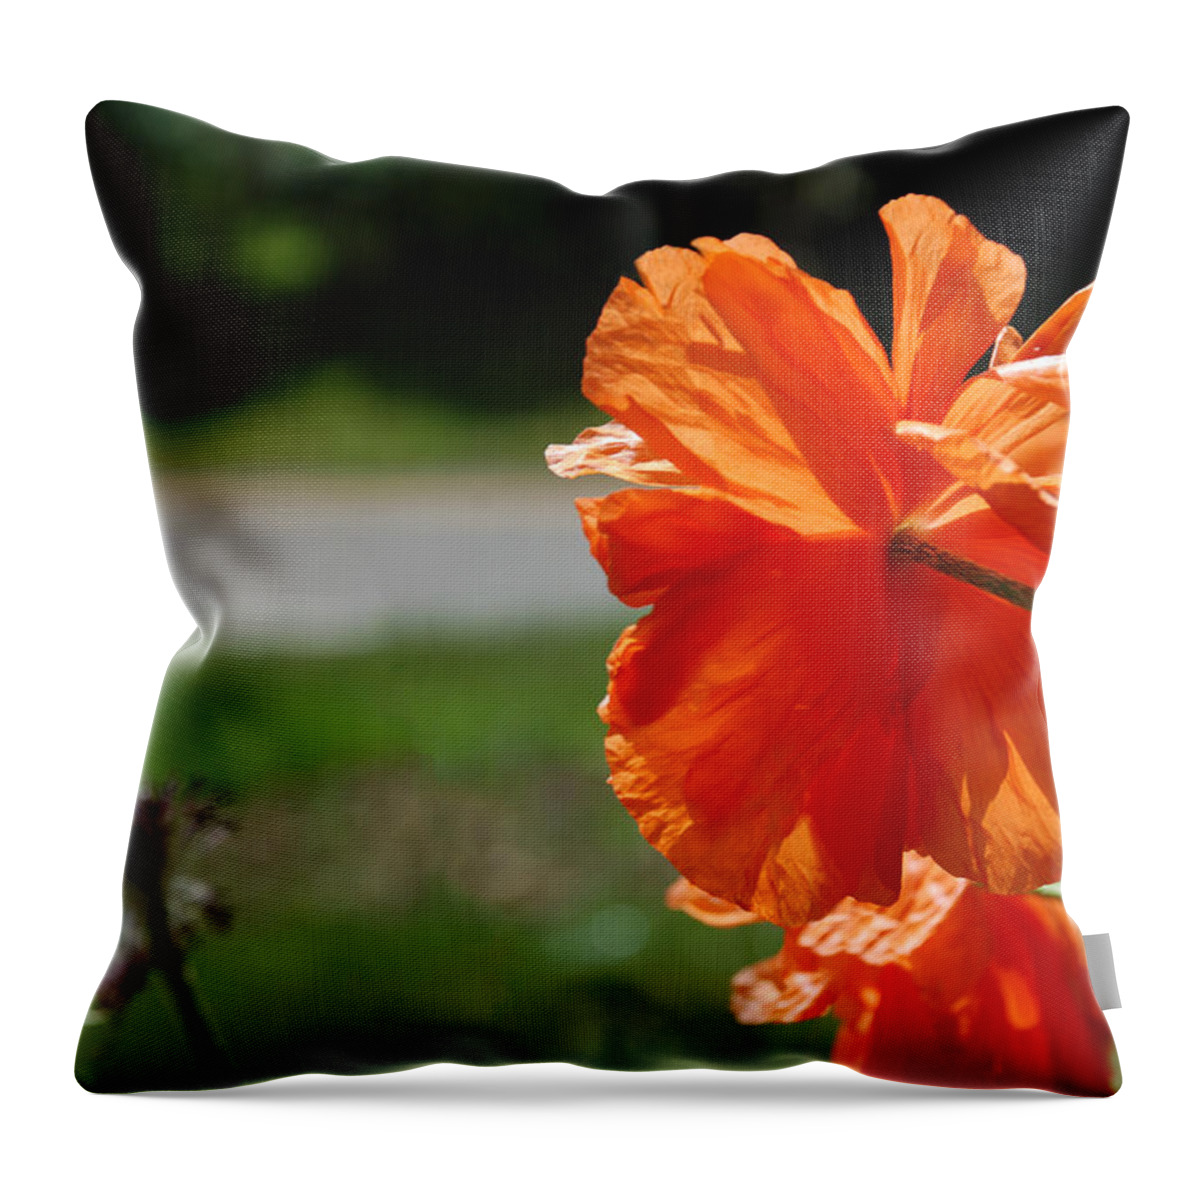 Orange Throw Pillow featuring the photograph Summer Poppy by Amanda Jones